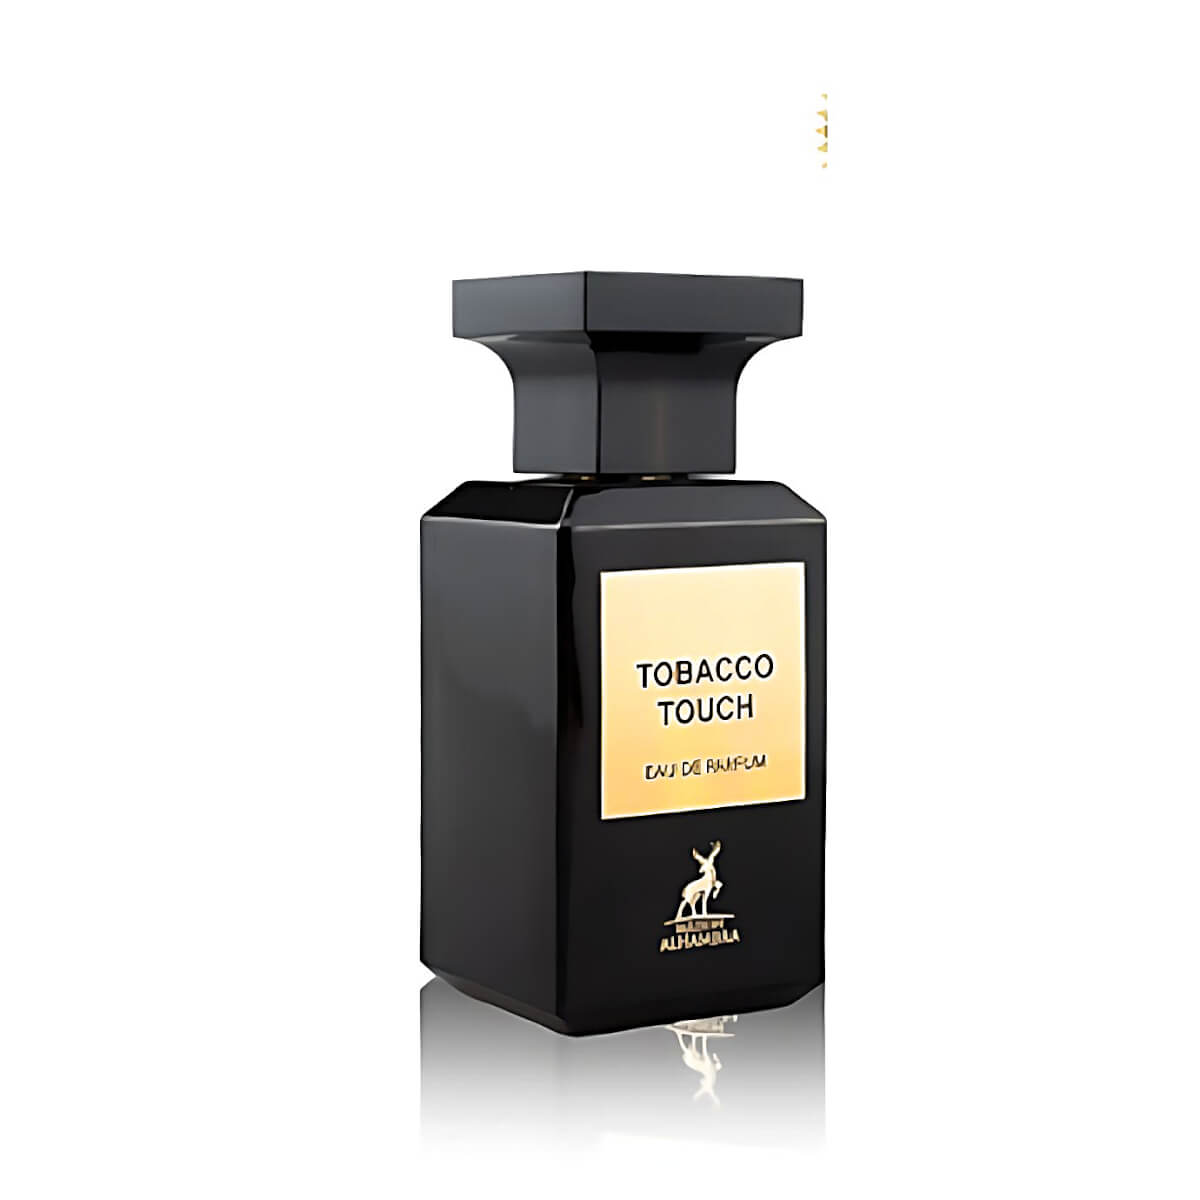 Tobacco Touch Perfume Eau De Parfum By Maison Alhambra Lattafa (Inspired By Tobacco Vanilla - Tom Ford)